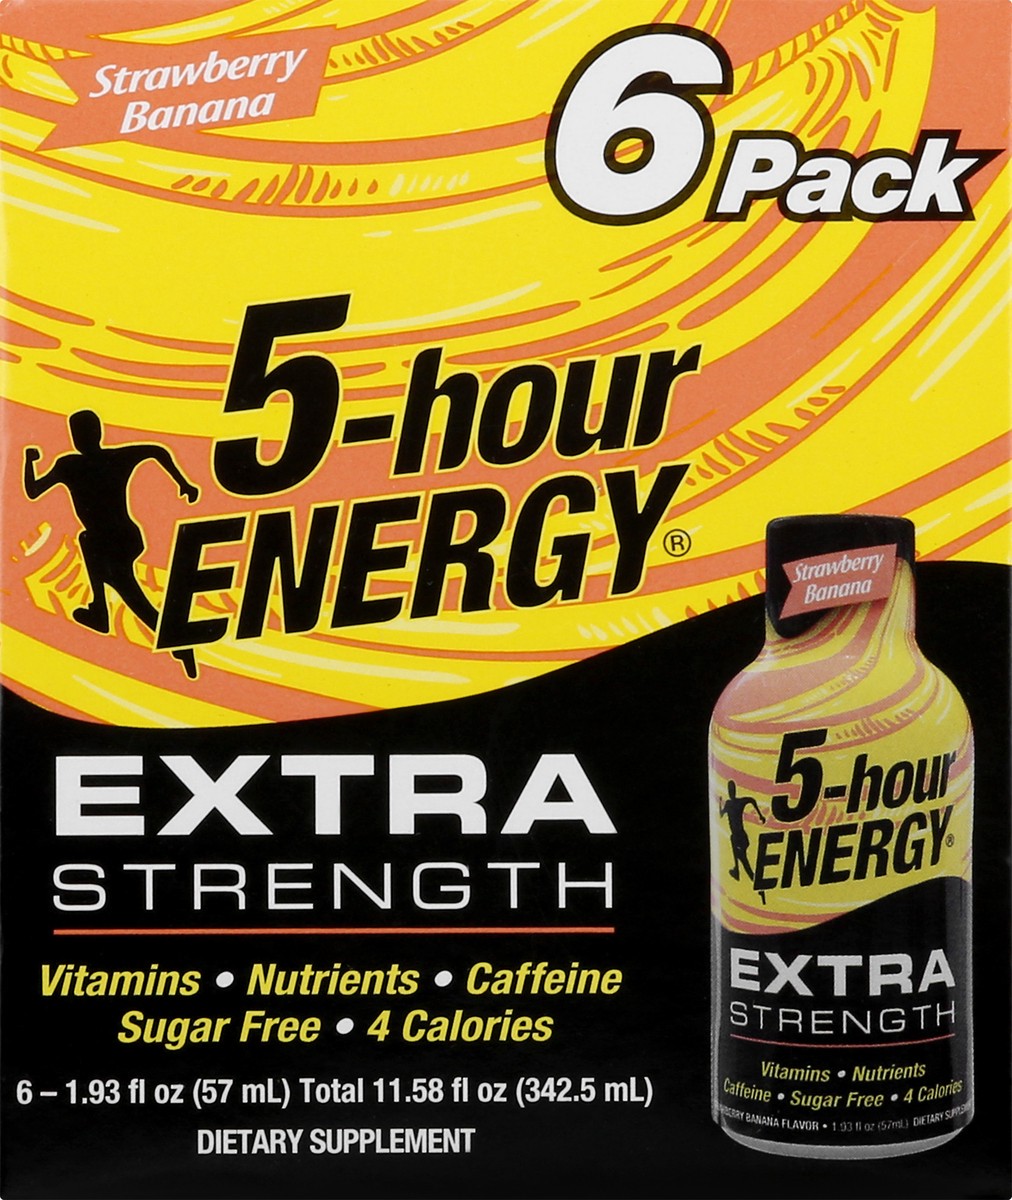 slide 7 of 9, 5-hour Energy, Extra Strength, Strawberry Banana, 6-pack, 6 ct